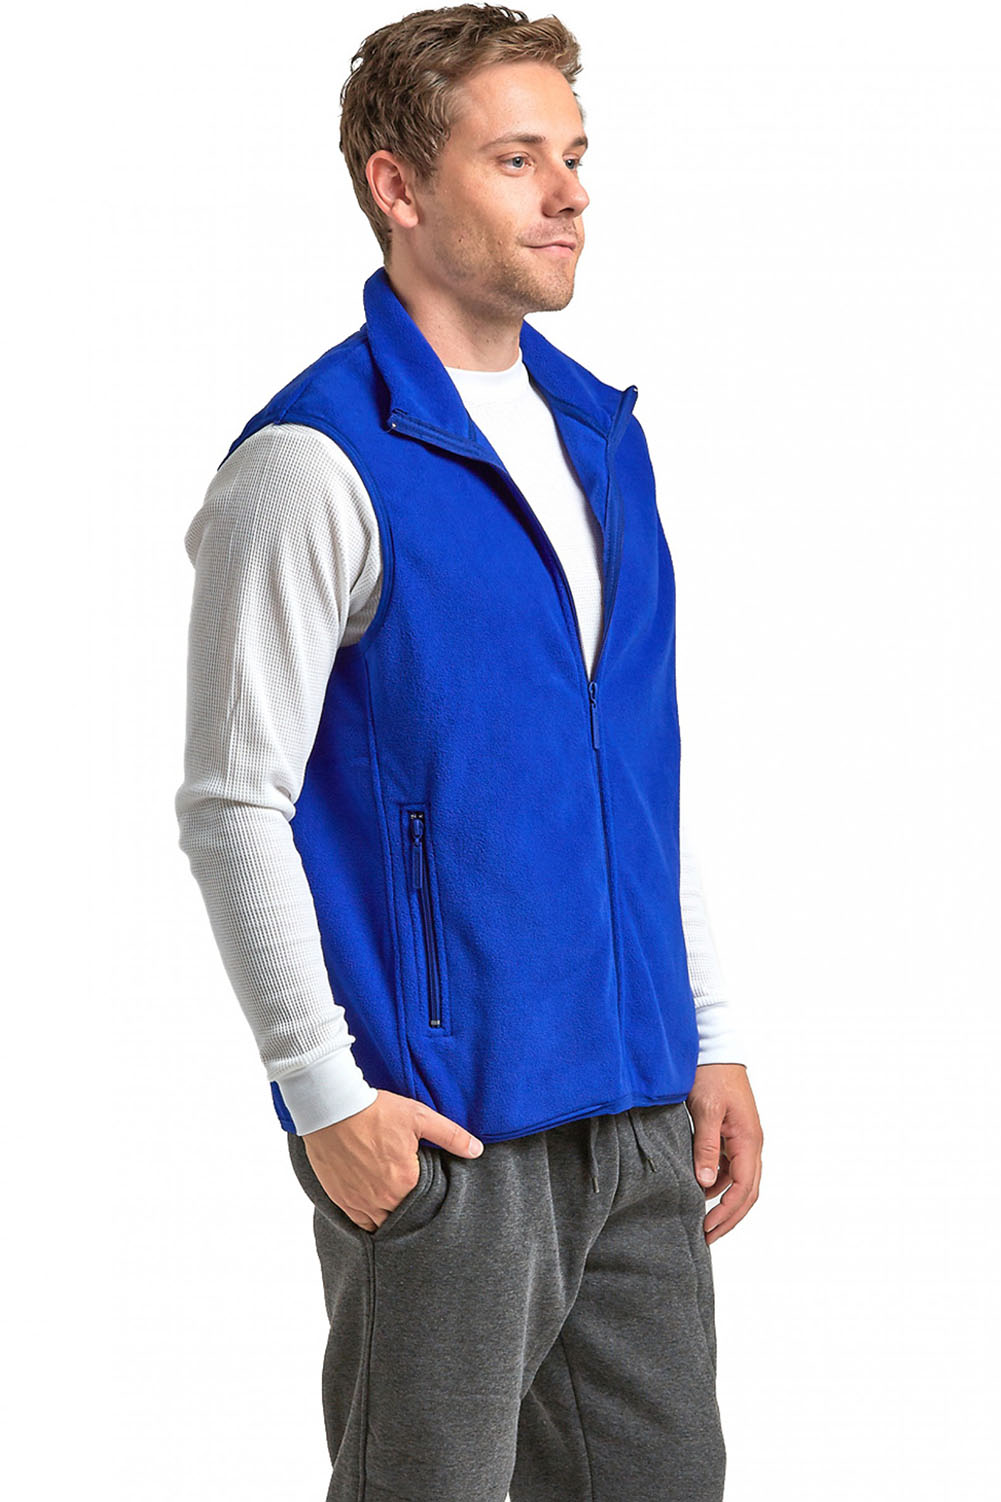 Men Polar Fleece Vest Zip Up Sleeveless Jacket Warm Winter Light | eBay